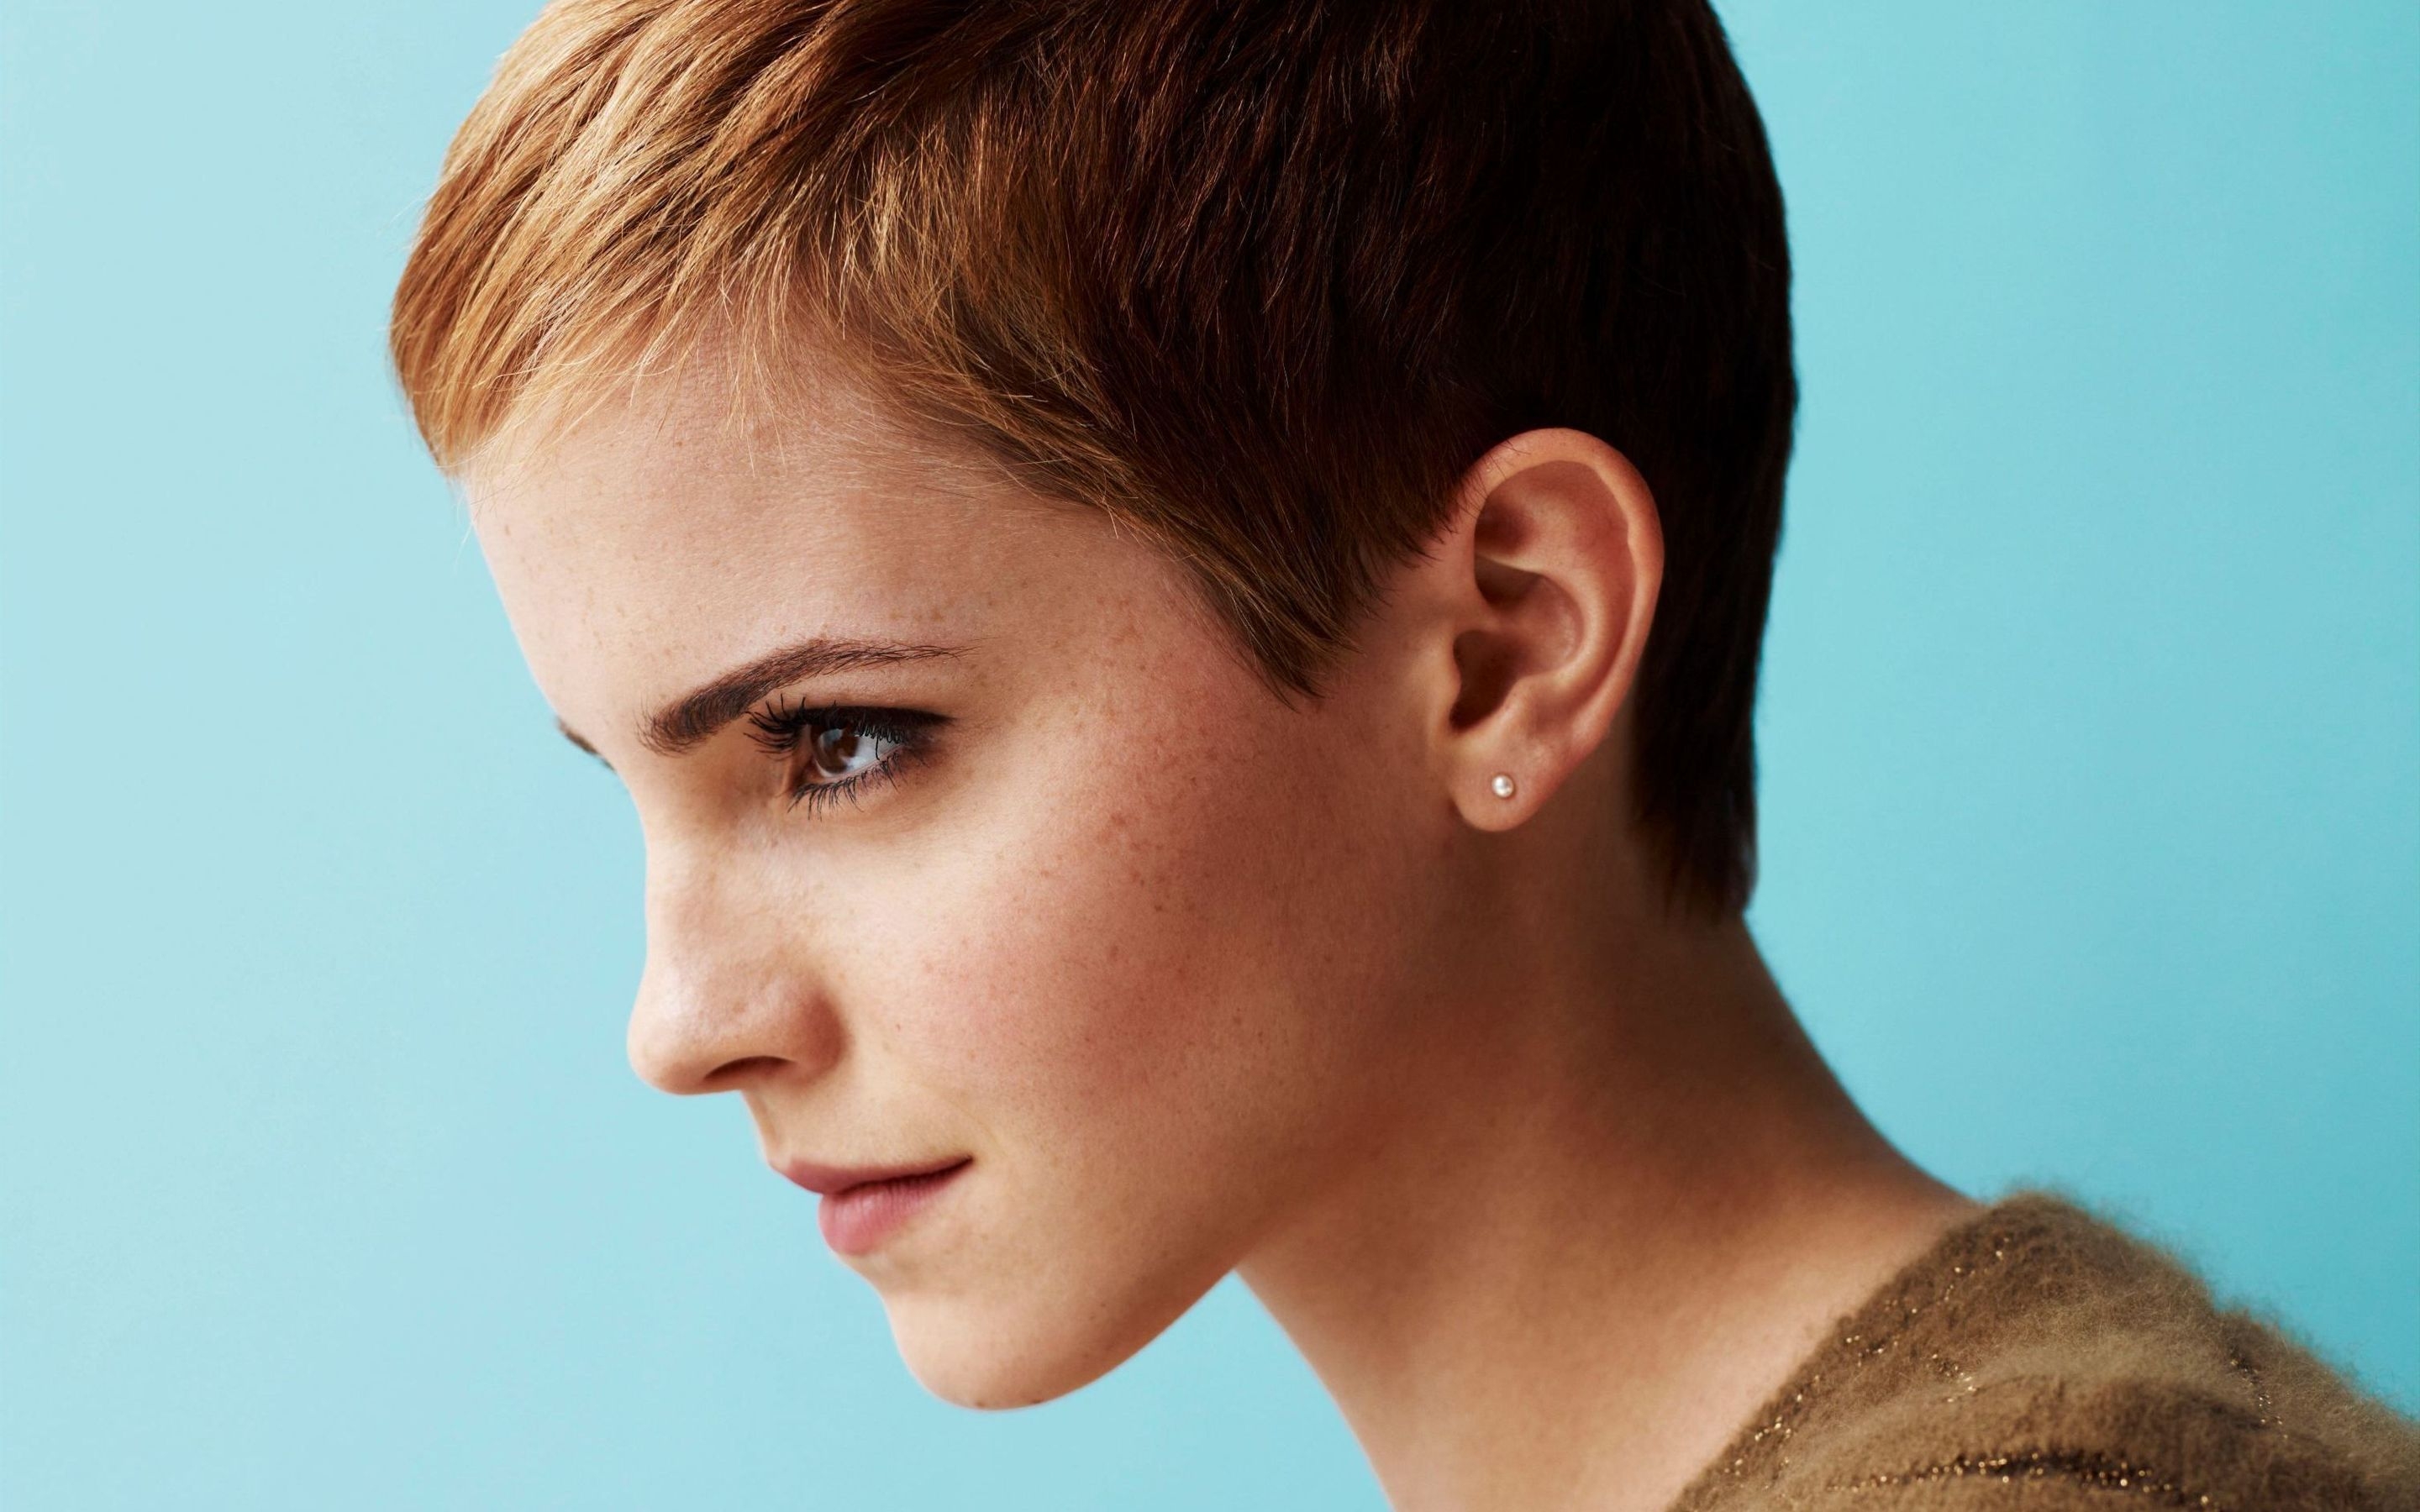 Emma Watson Short Hair for 2880 x 1800 Retina Display resolution